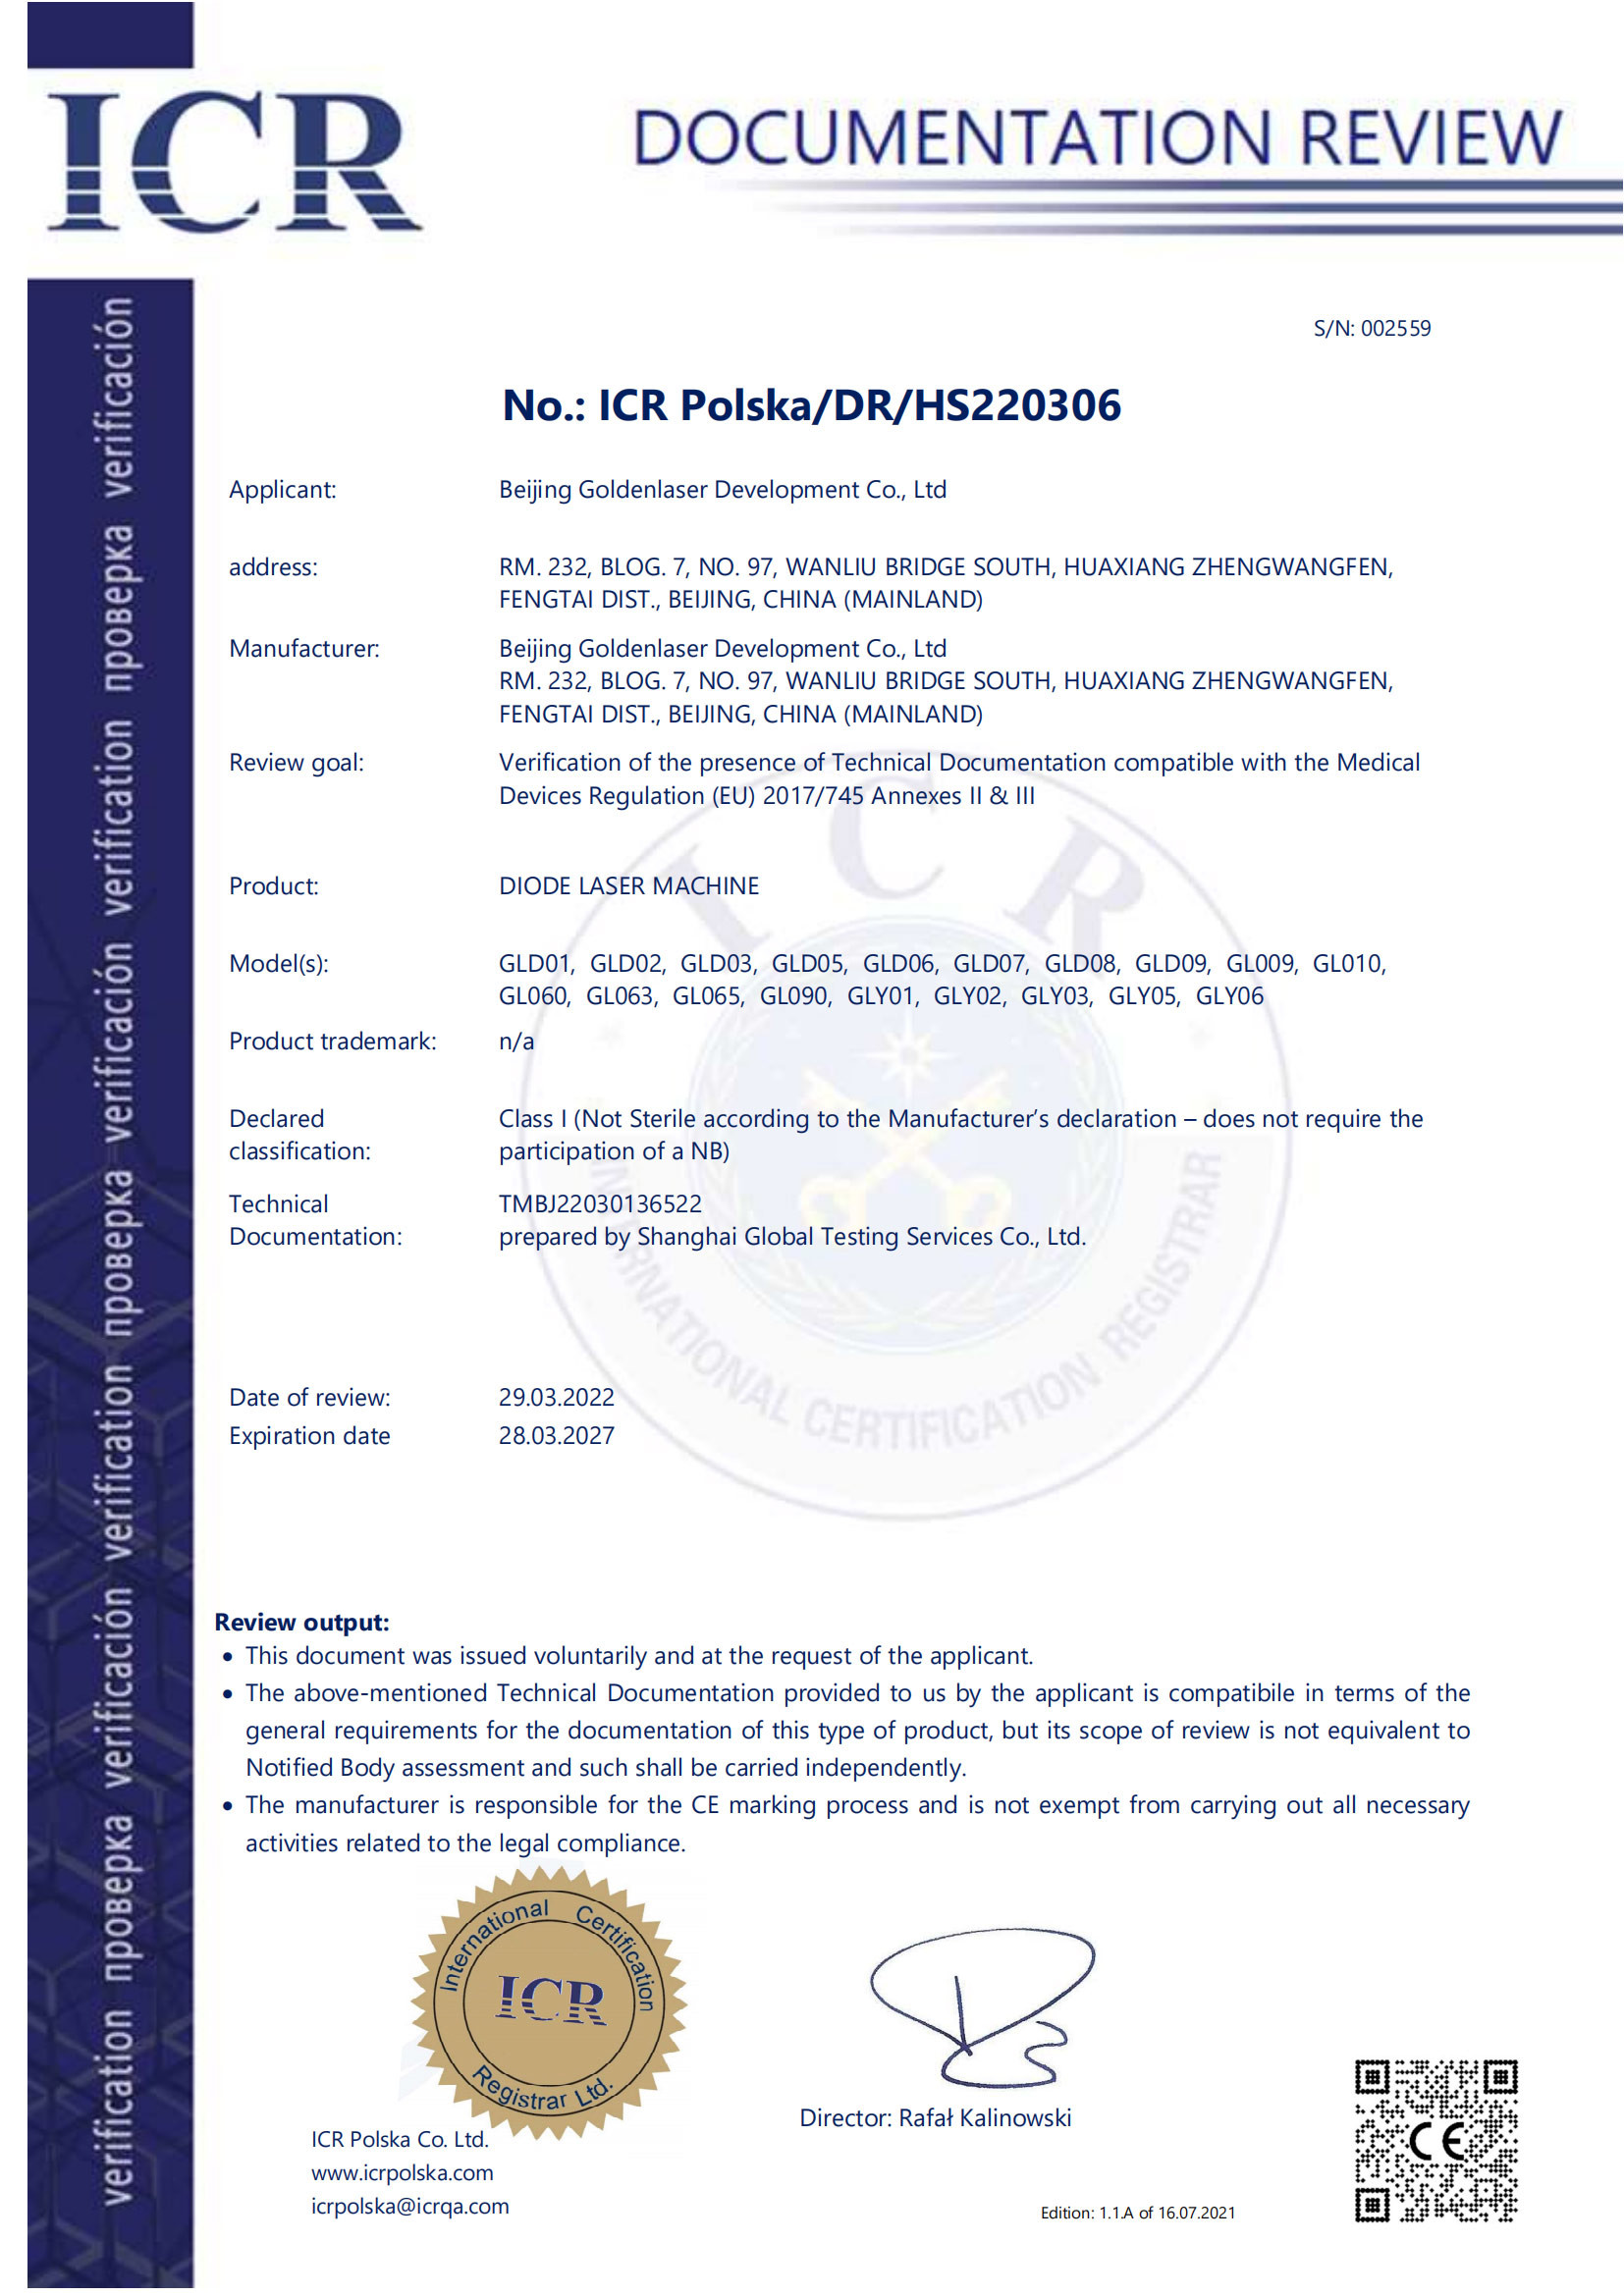 Beijing Goldenlaser Development Co., Ltd Certifications